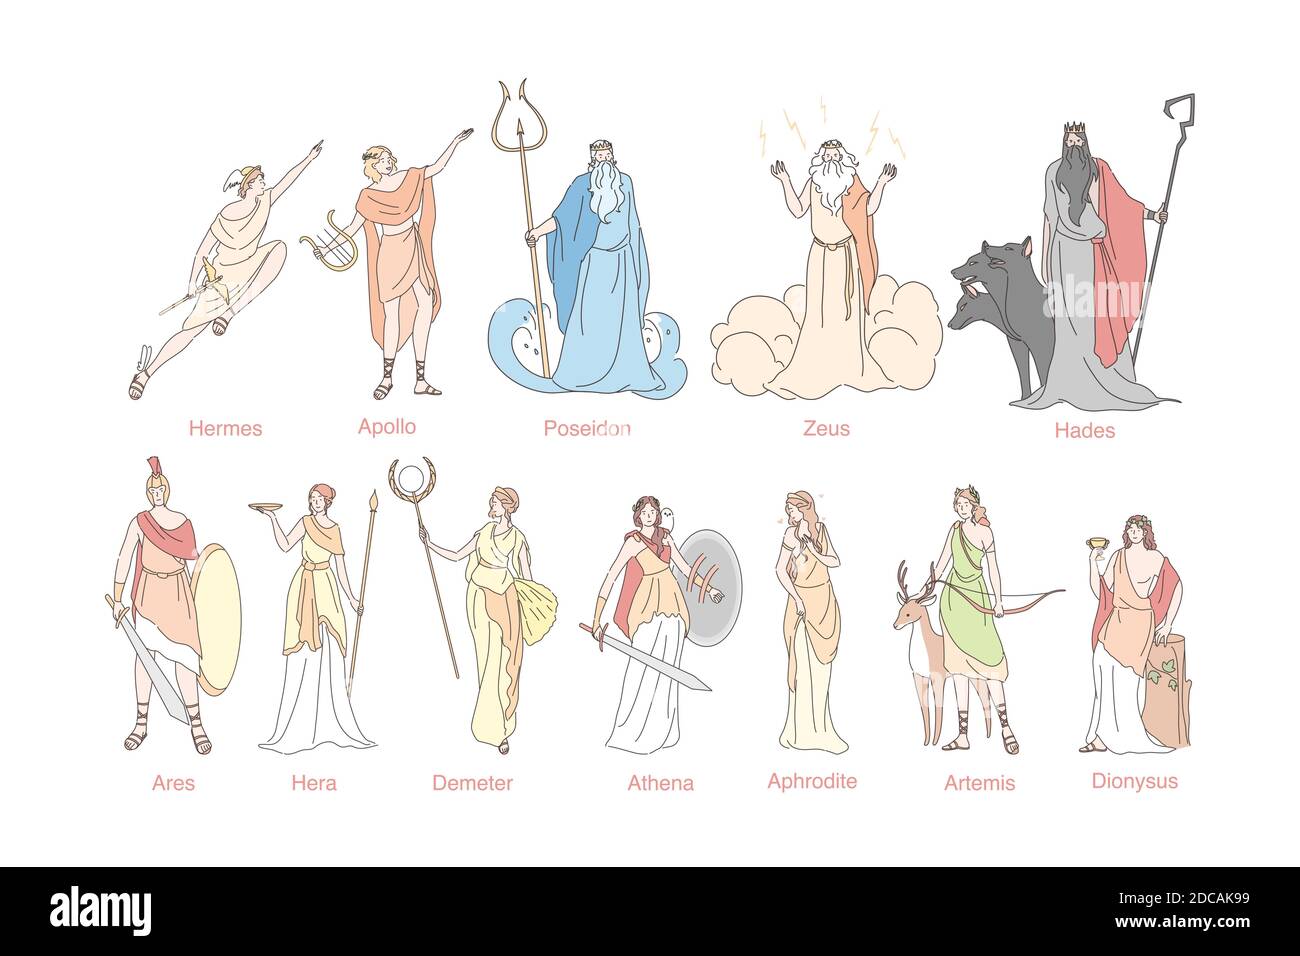 Ancient greek gods set concept. God pantheon in Greece Hermes, Apollo, Poseidon, Zeus, Hades, Ares, Hera, Demeter, Athena, Aphrodite, Artemis and Dion Stock Vector